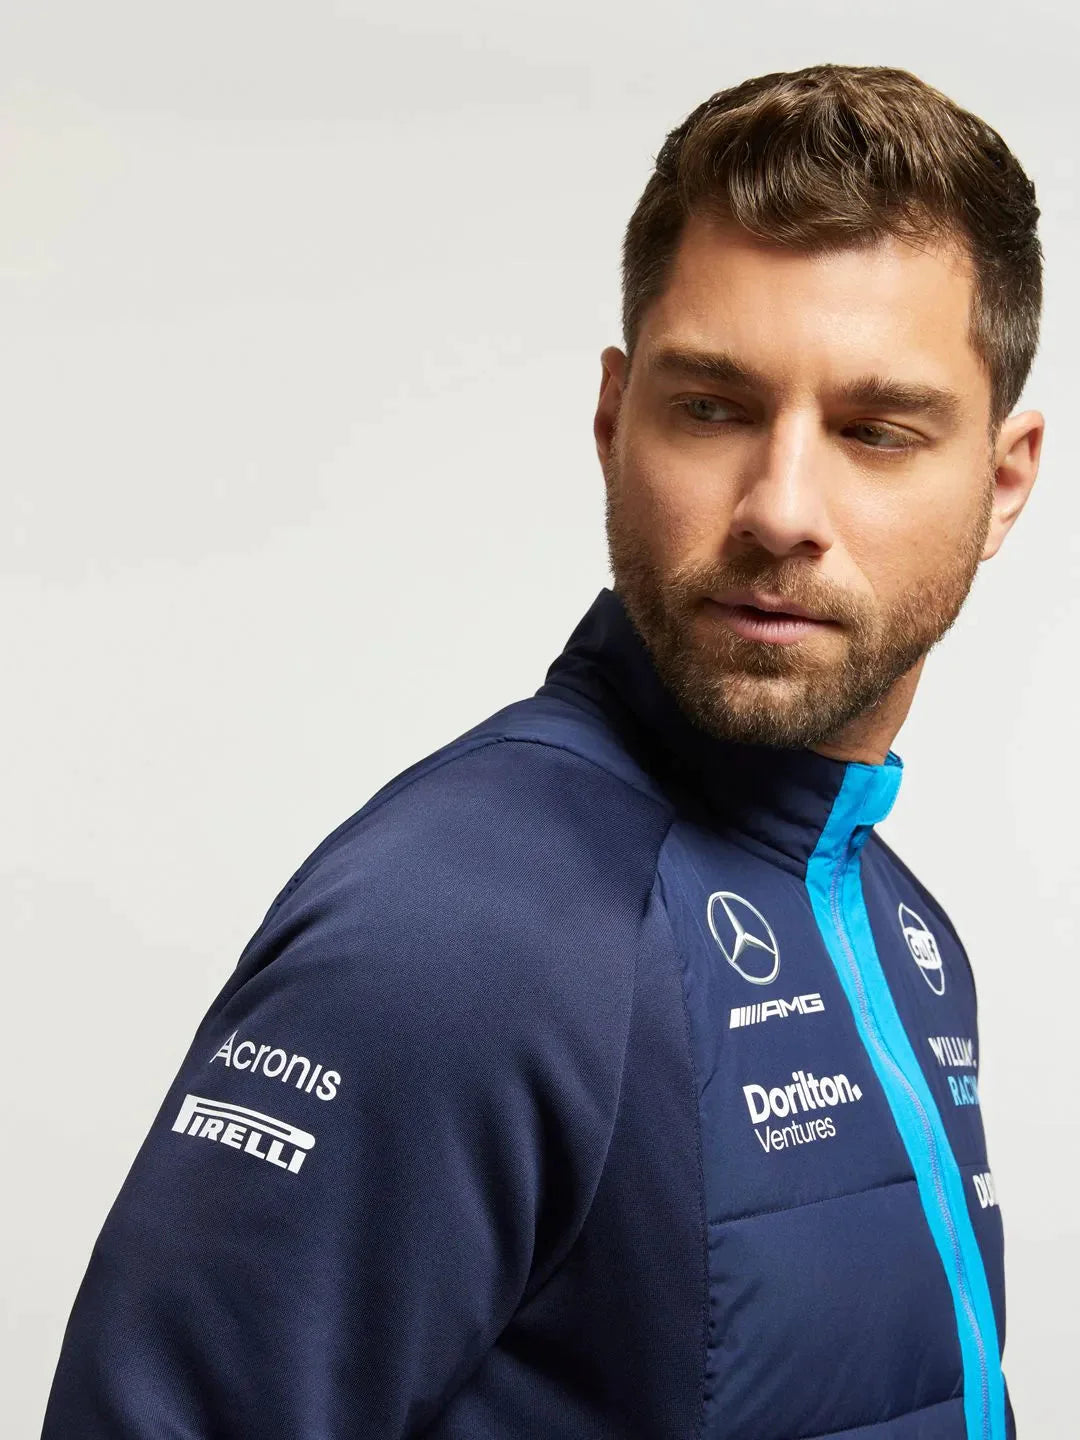 Williams Racing F1 2023 Men's Team Thermal Jacket -Blue